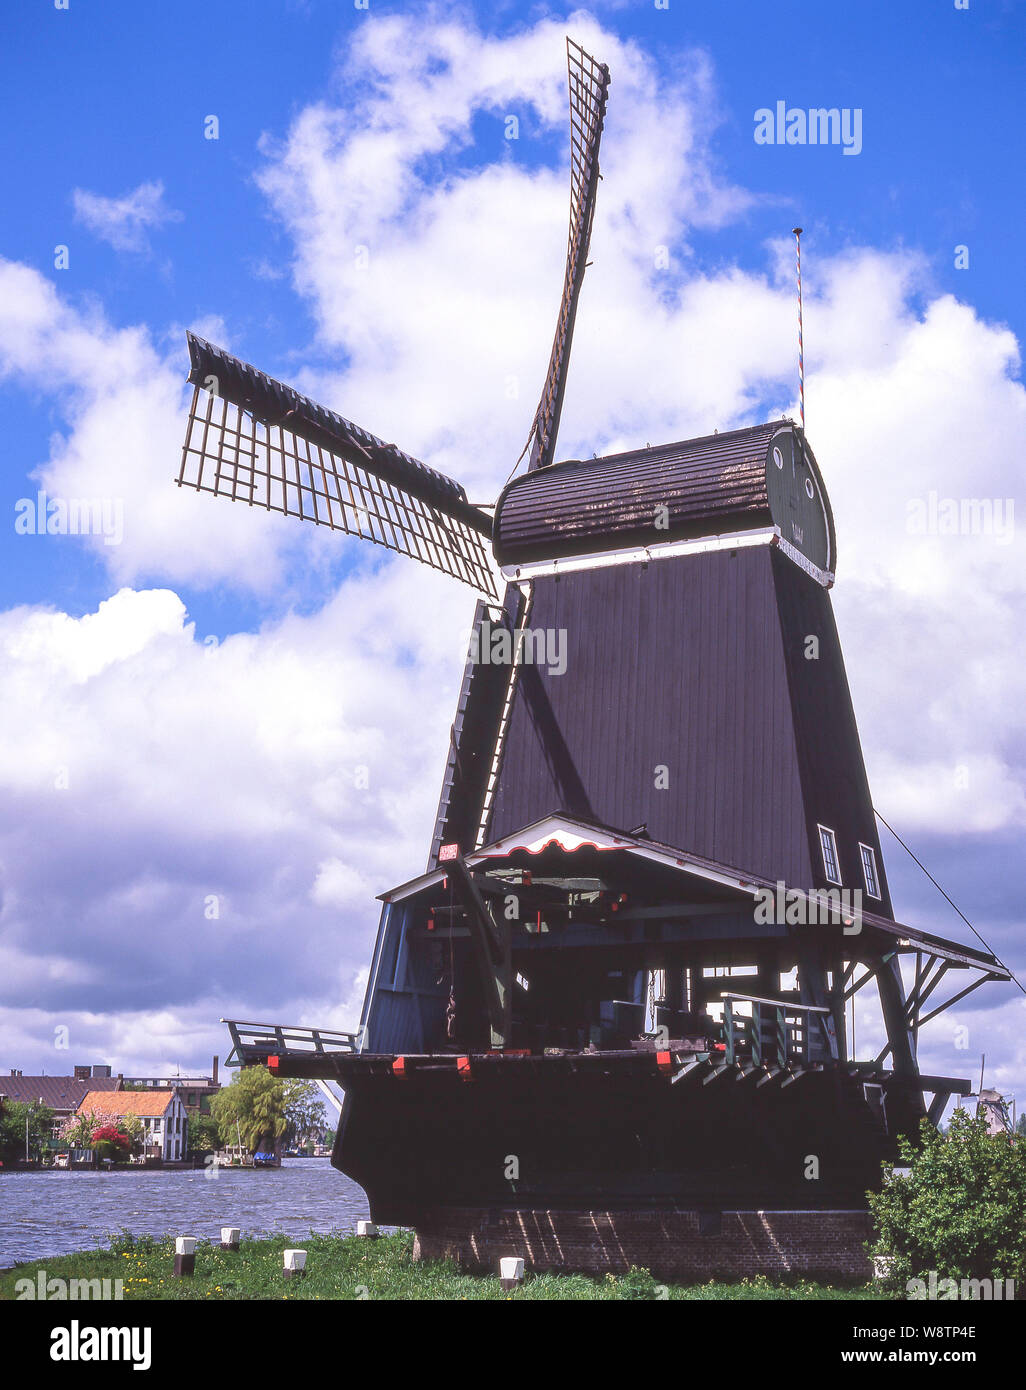 The Windmills of Kinderdijk, Kinderdijk, Zuid-Holland, Kingdom of the Netherlands Stock Photo